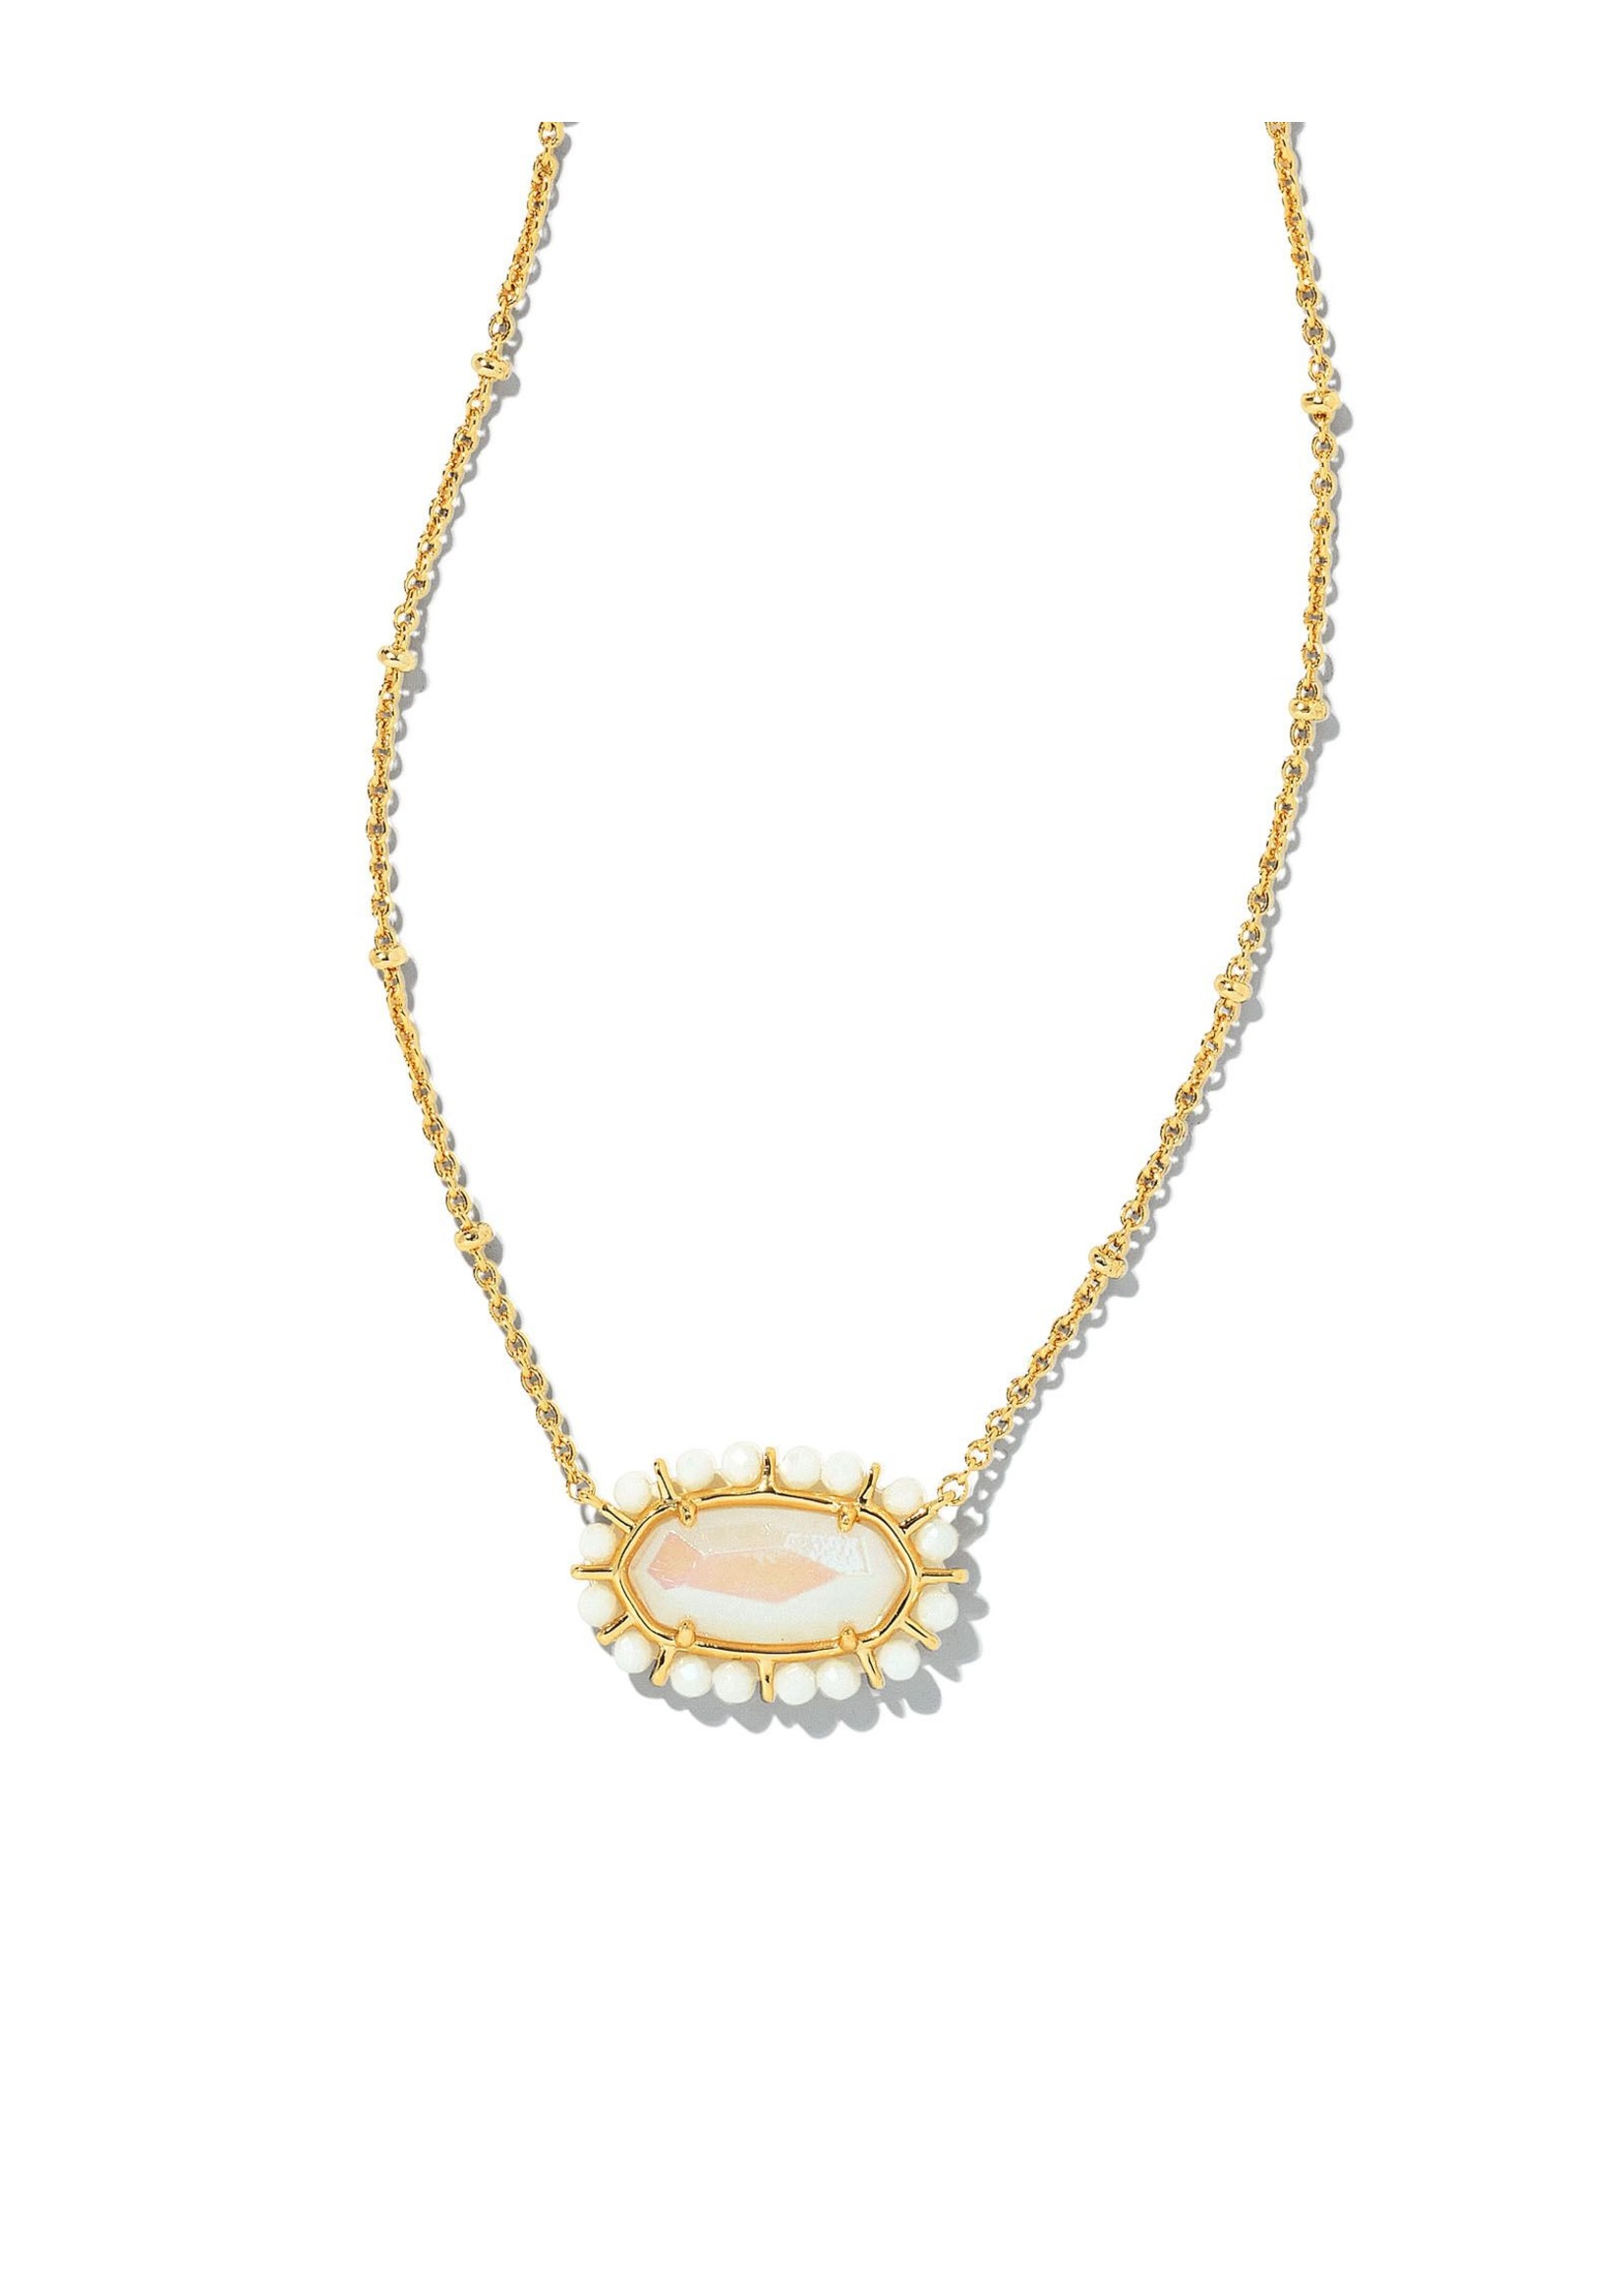 The Beaded Elisa Pendant Necklace